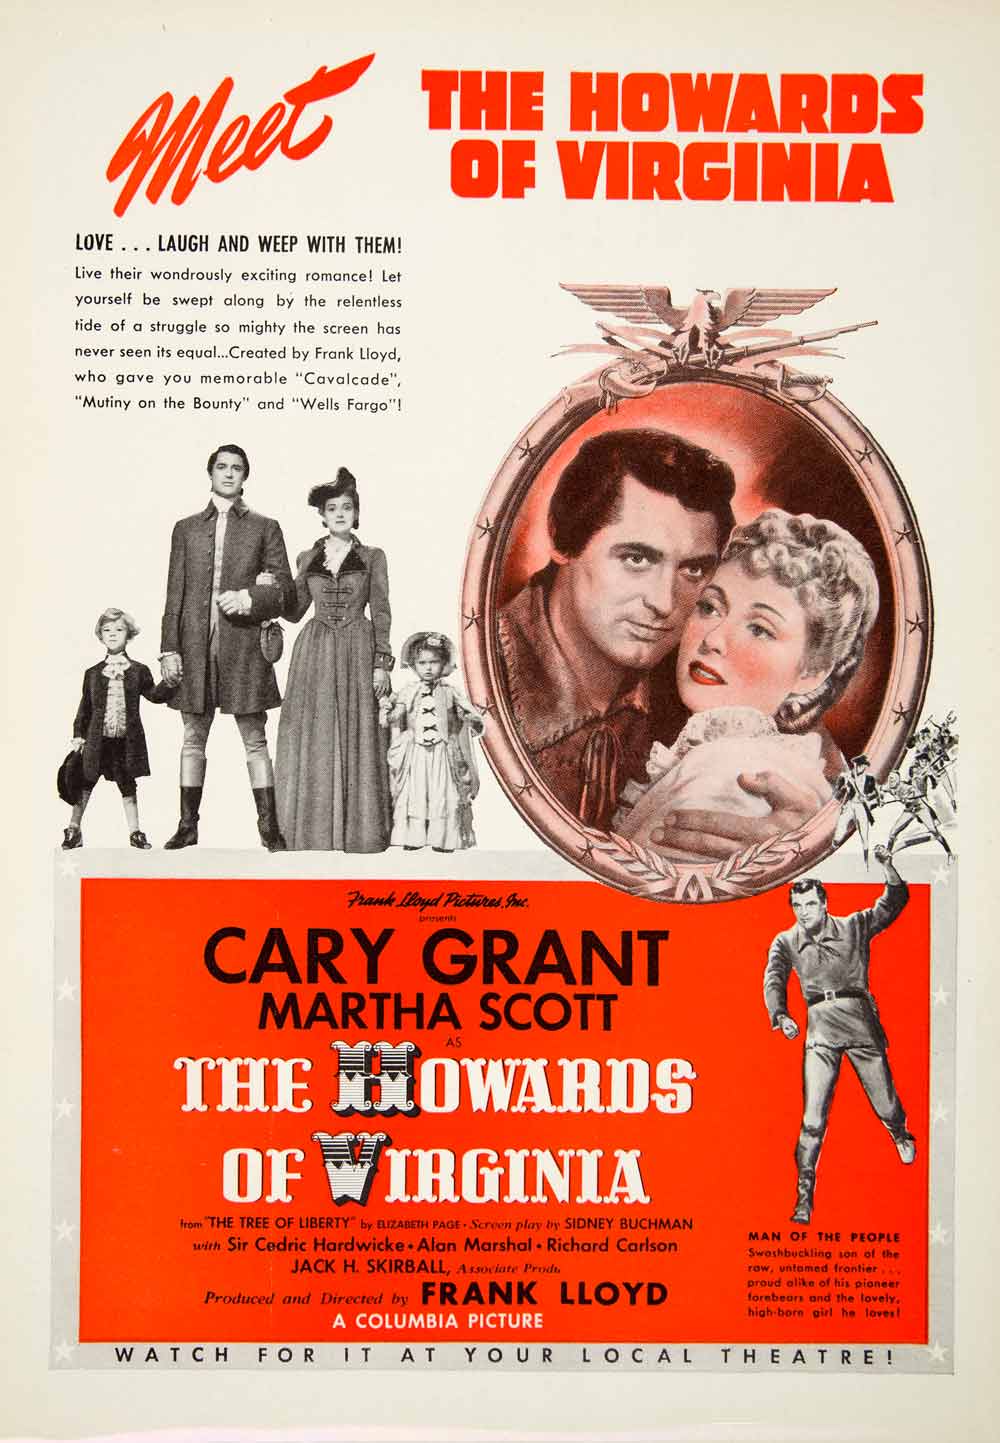 1940 Ad Cary Grant Martha Scott Howards Virginia Frank Lloyd Columbia Mofie PPM1